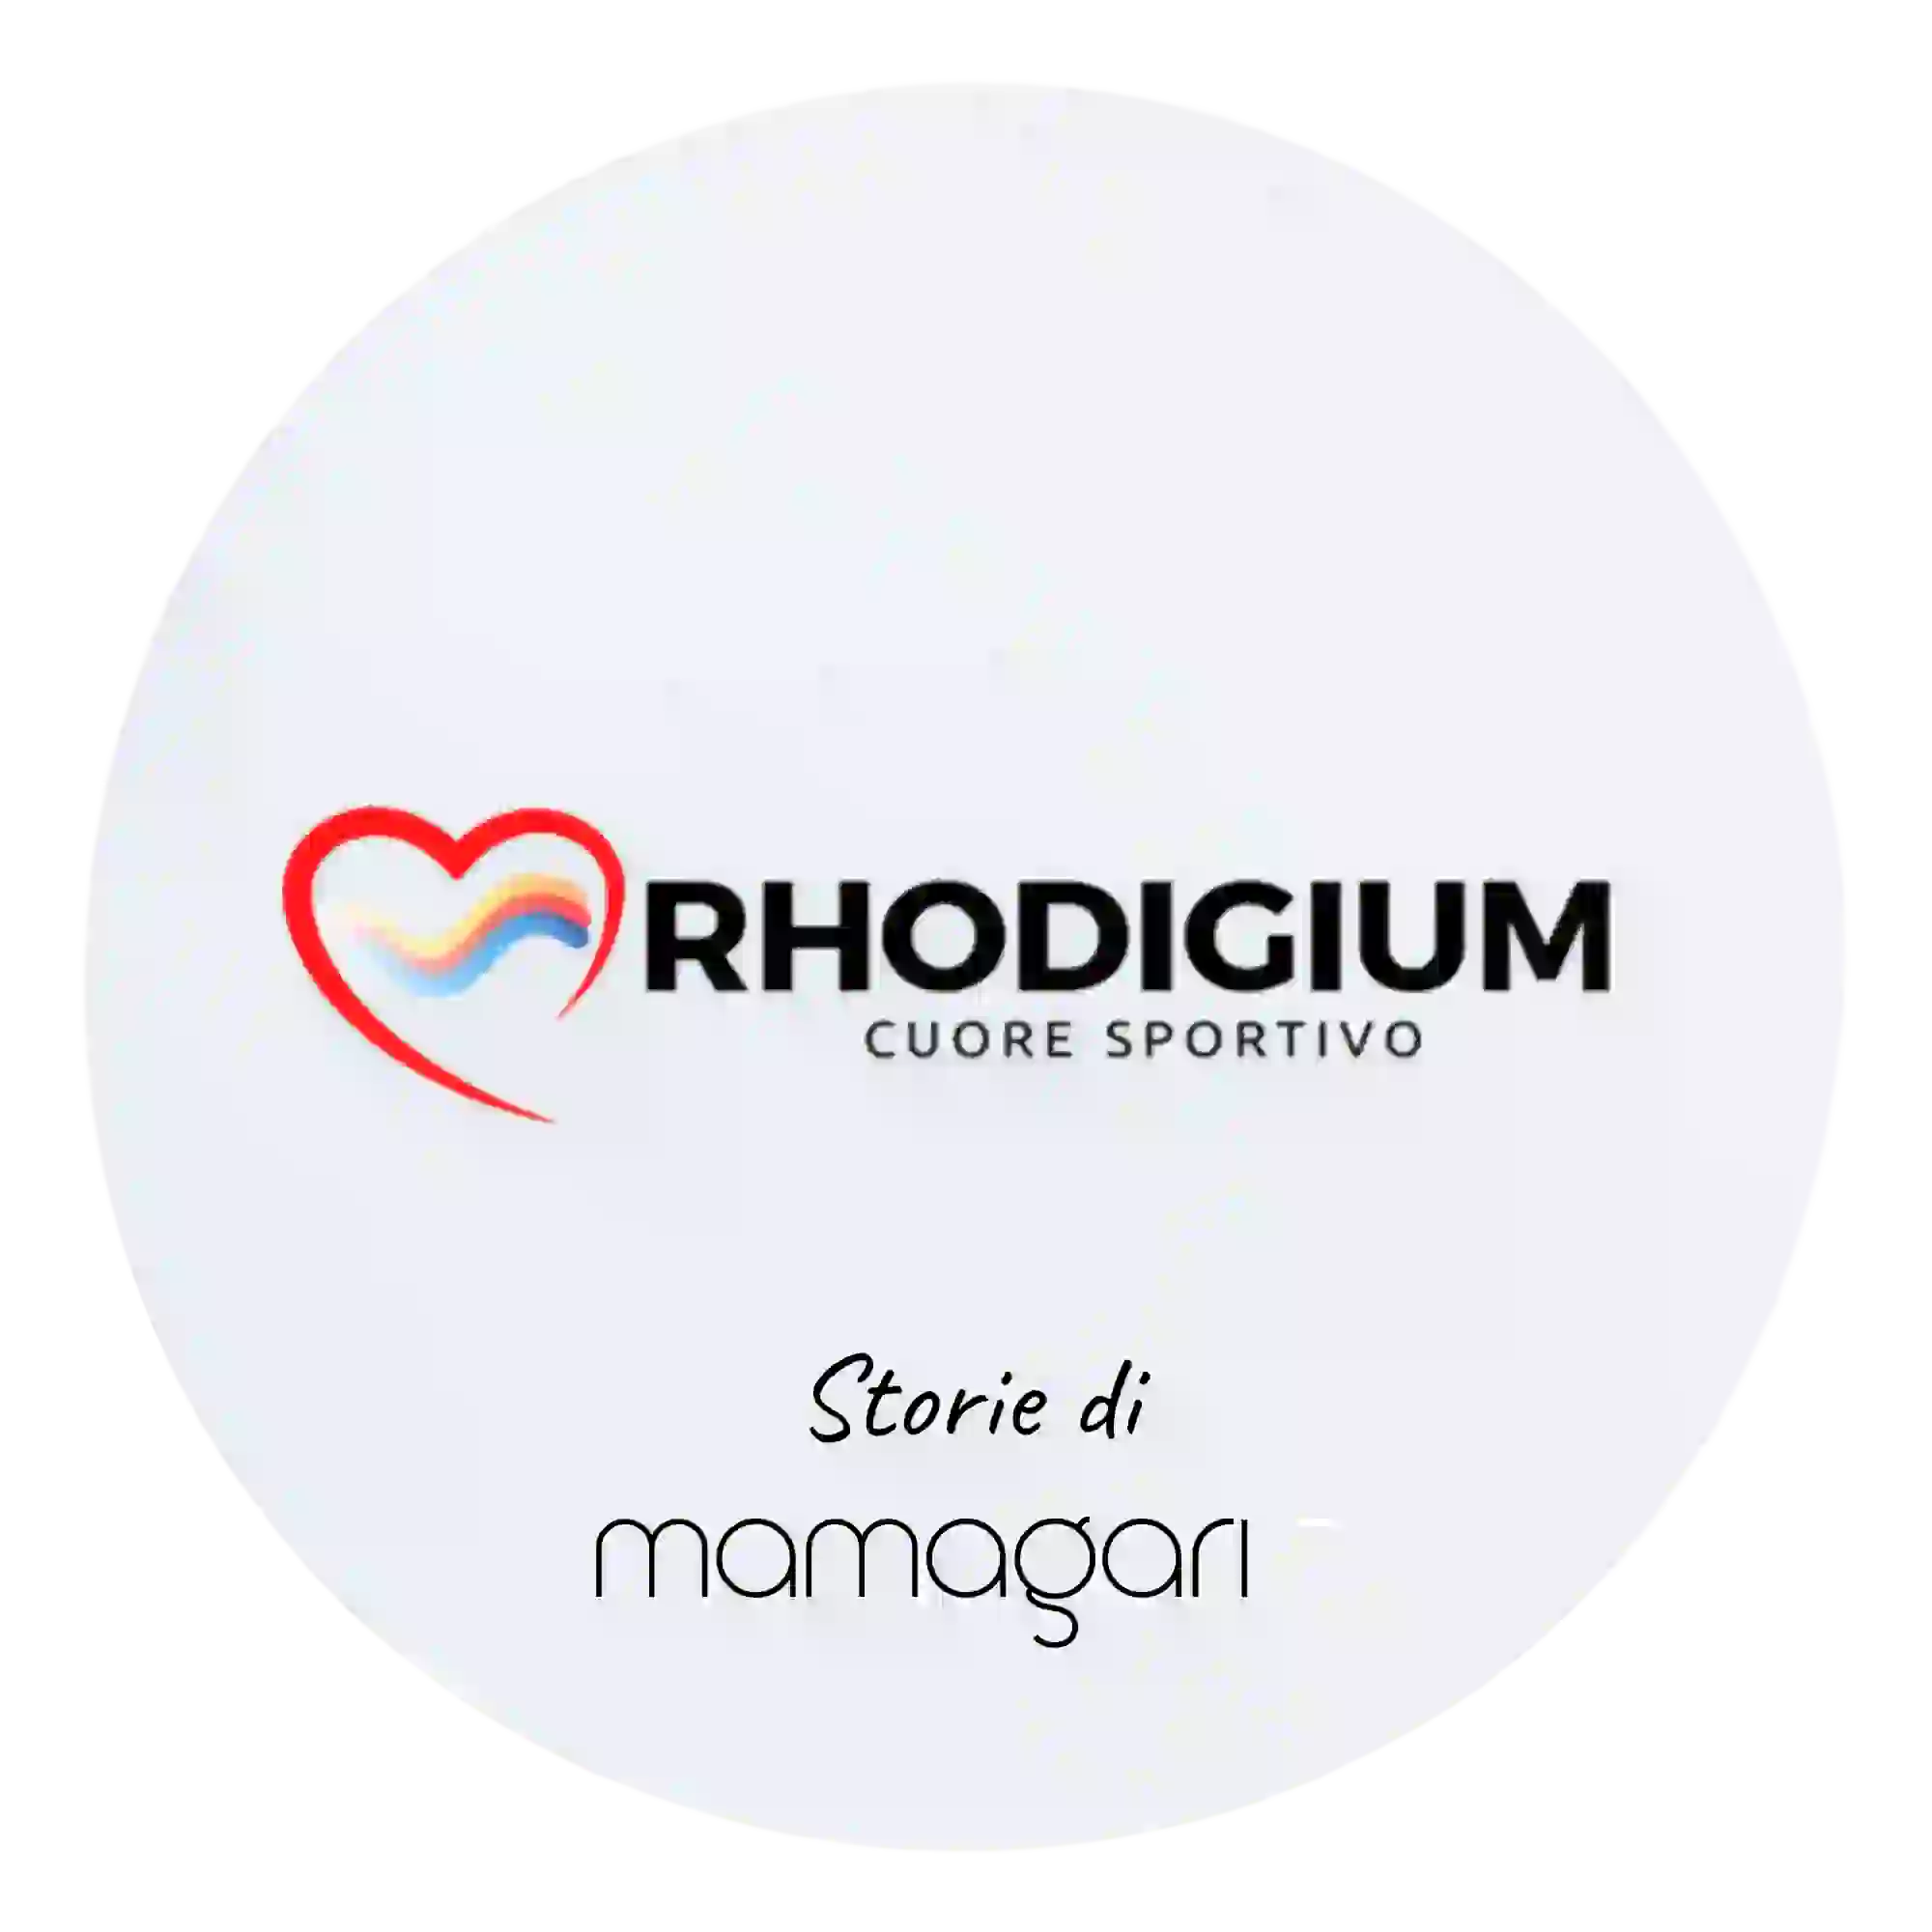 Rhodigium Agenzia di web marketing italia seo google ads social e website